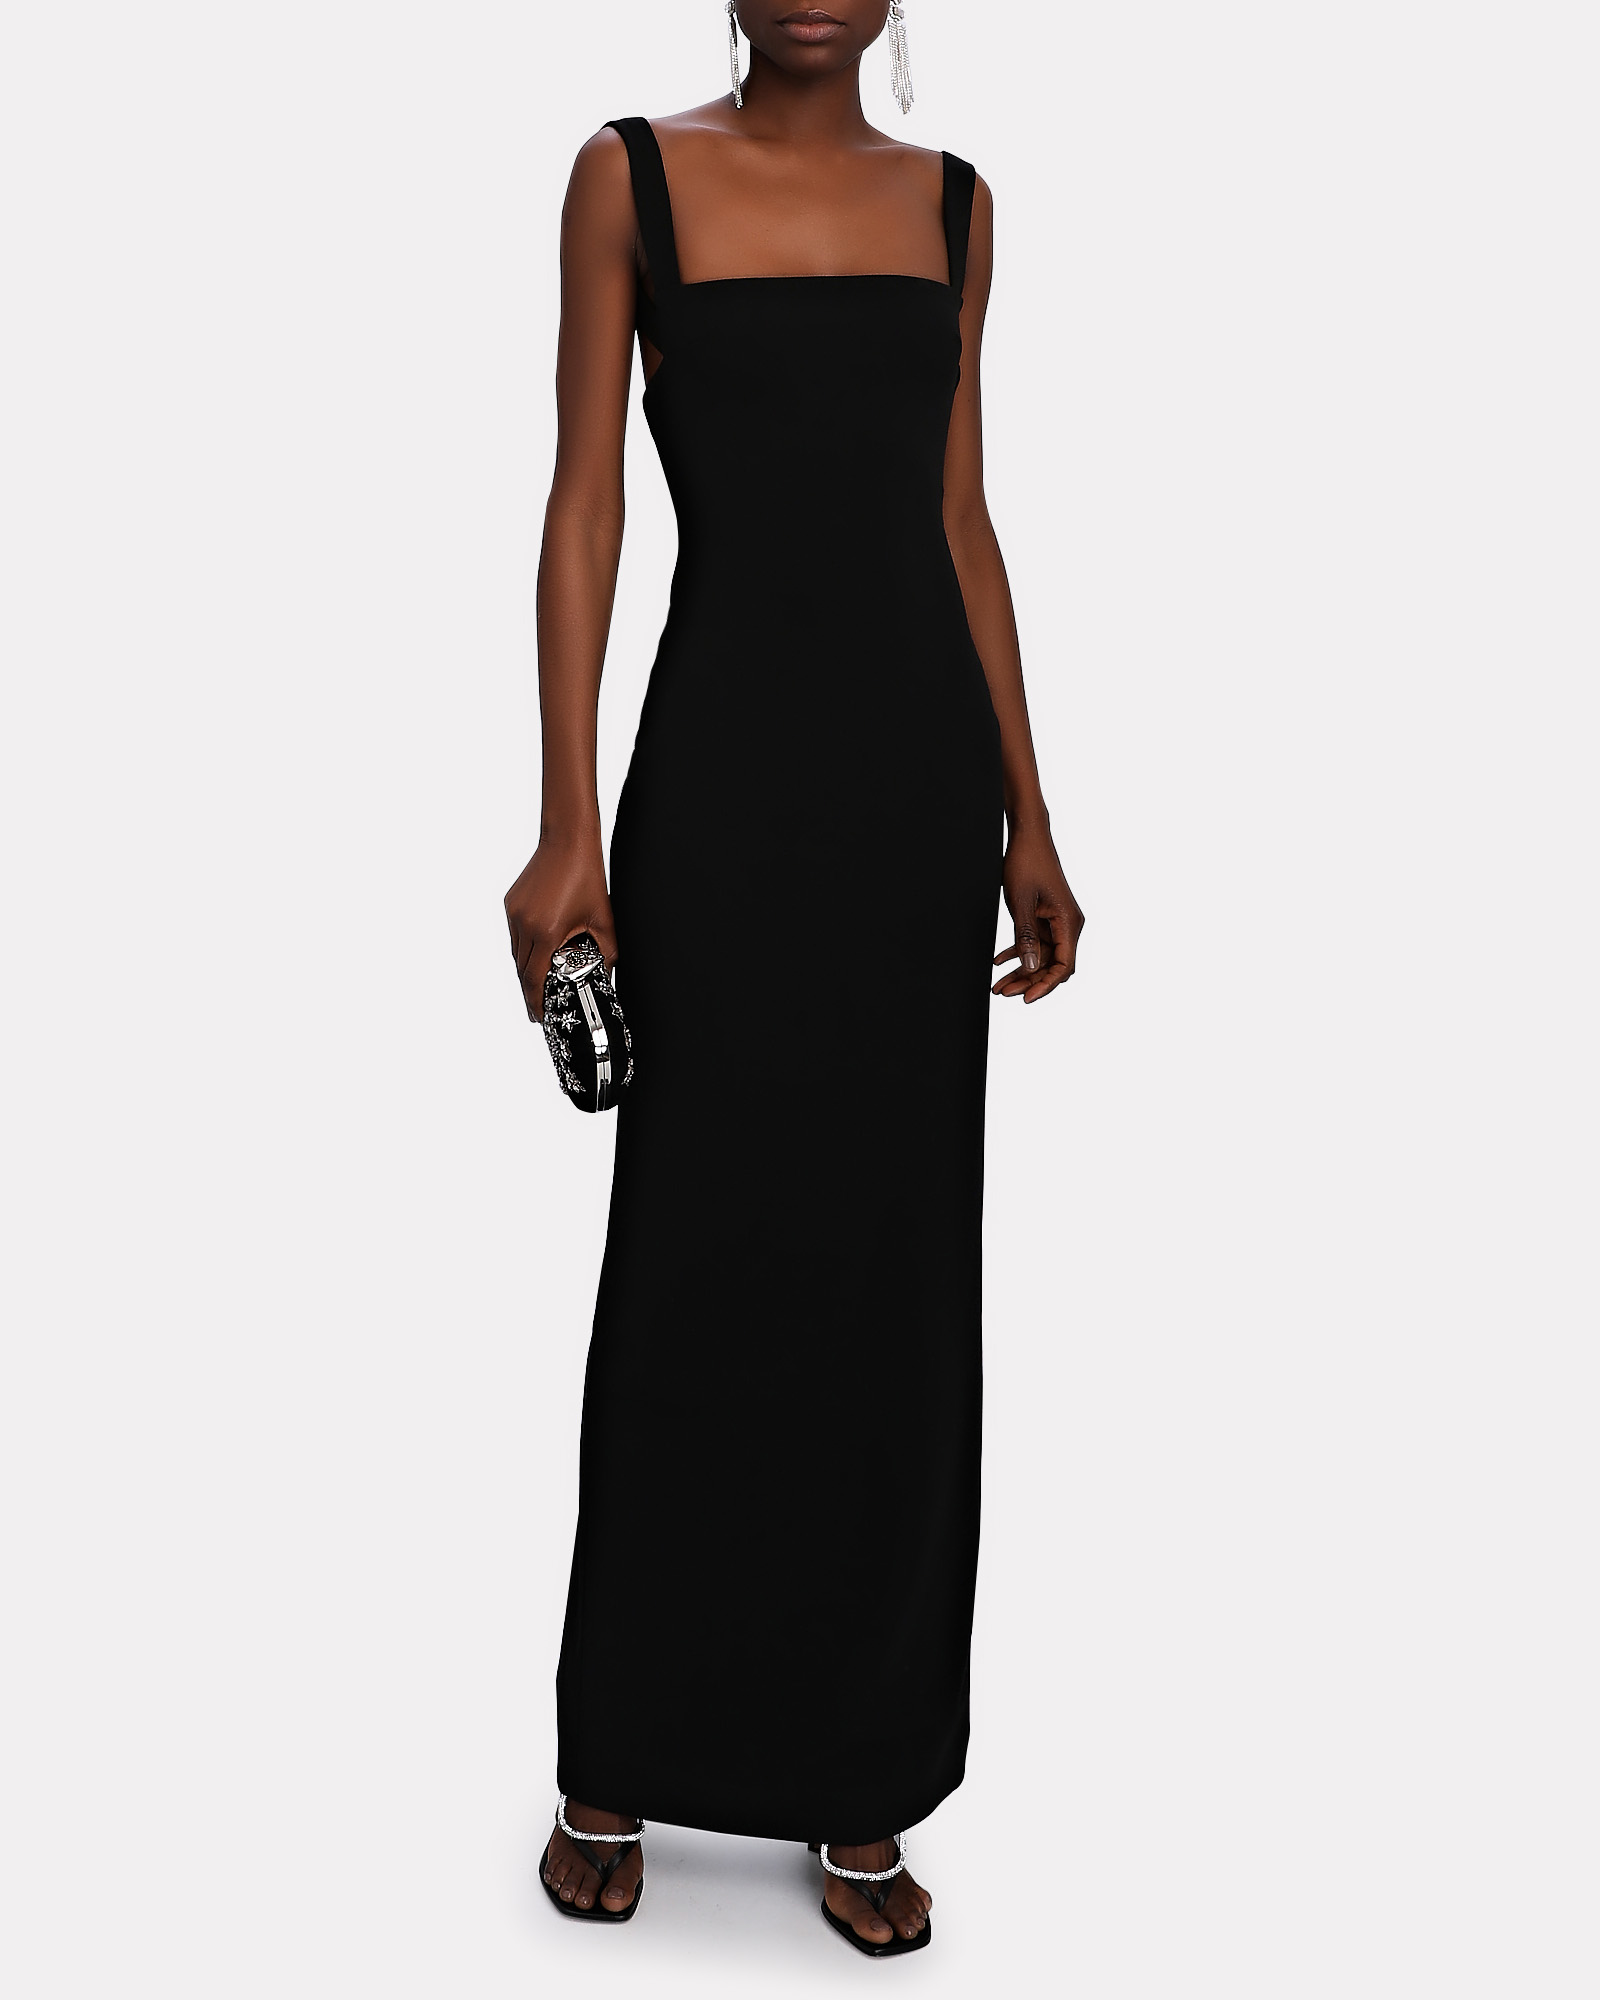 Solace London Joni Crepe Maxi Dress | INTERMIX®